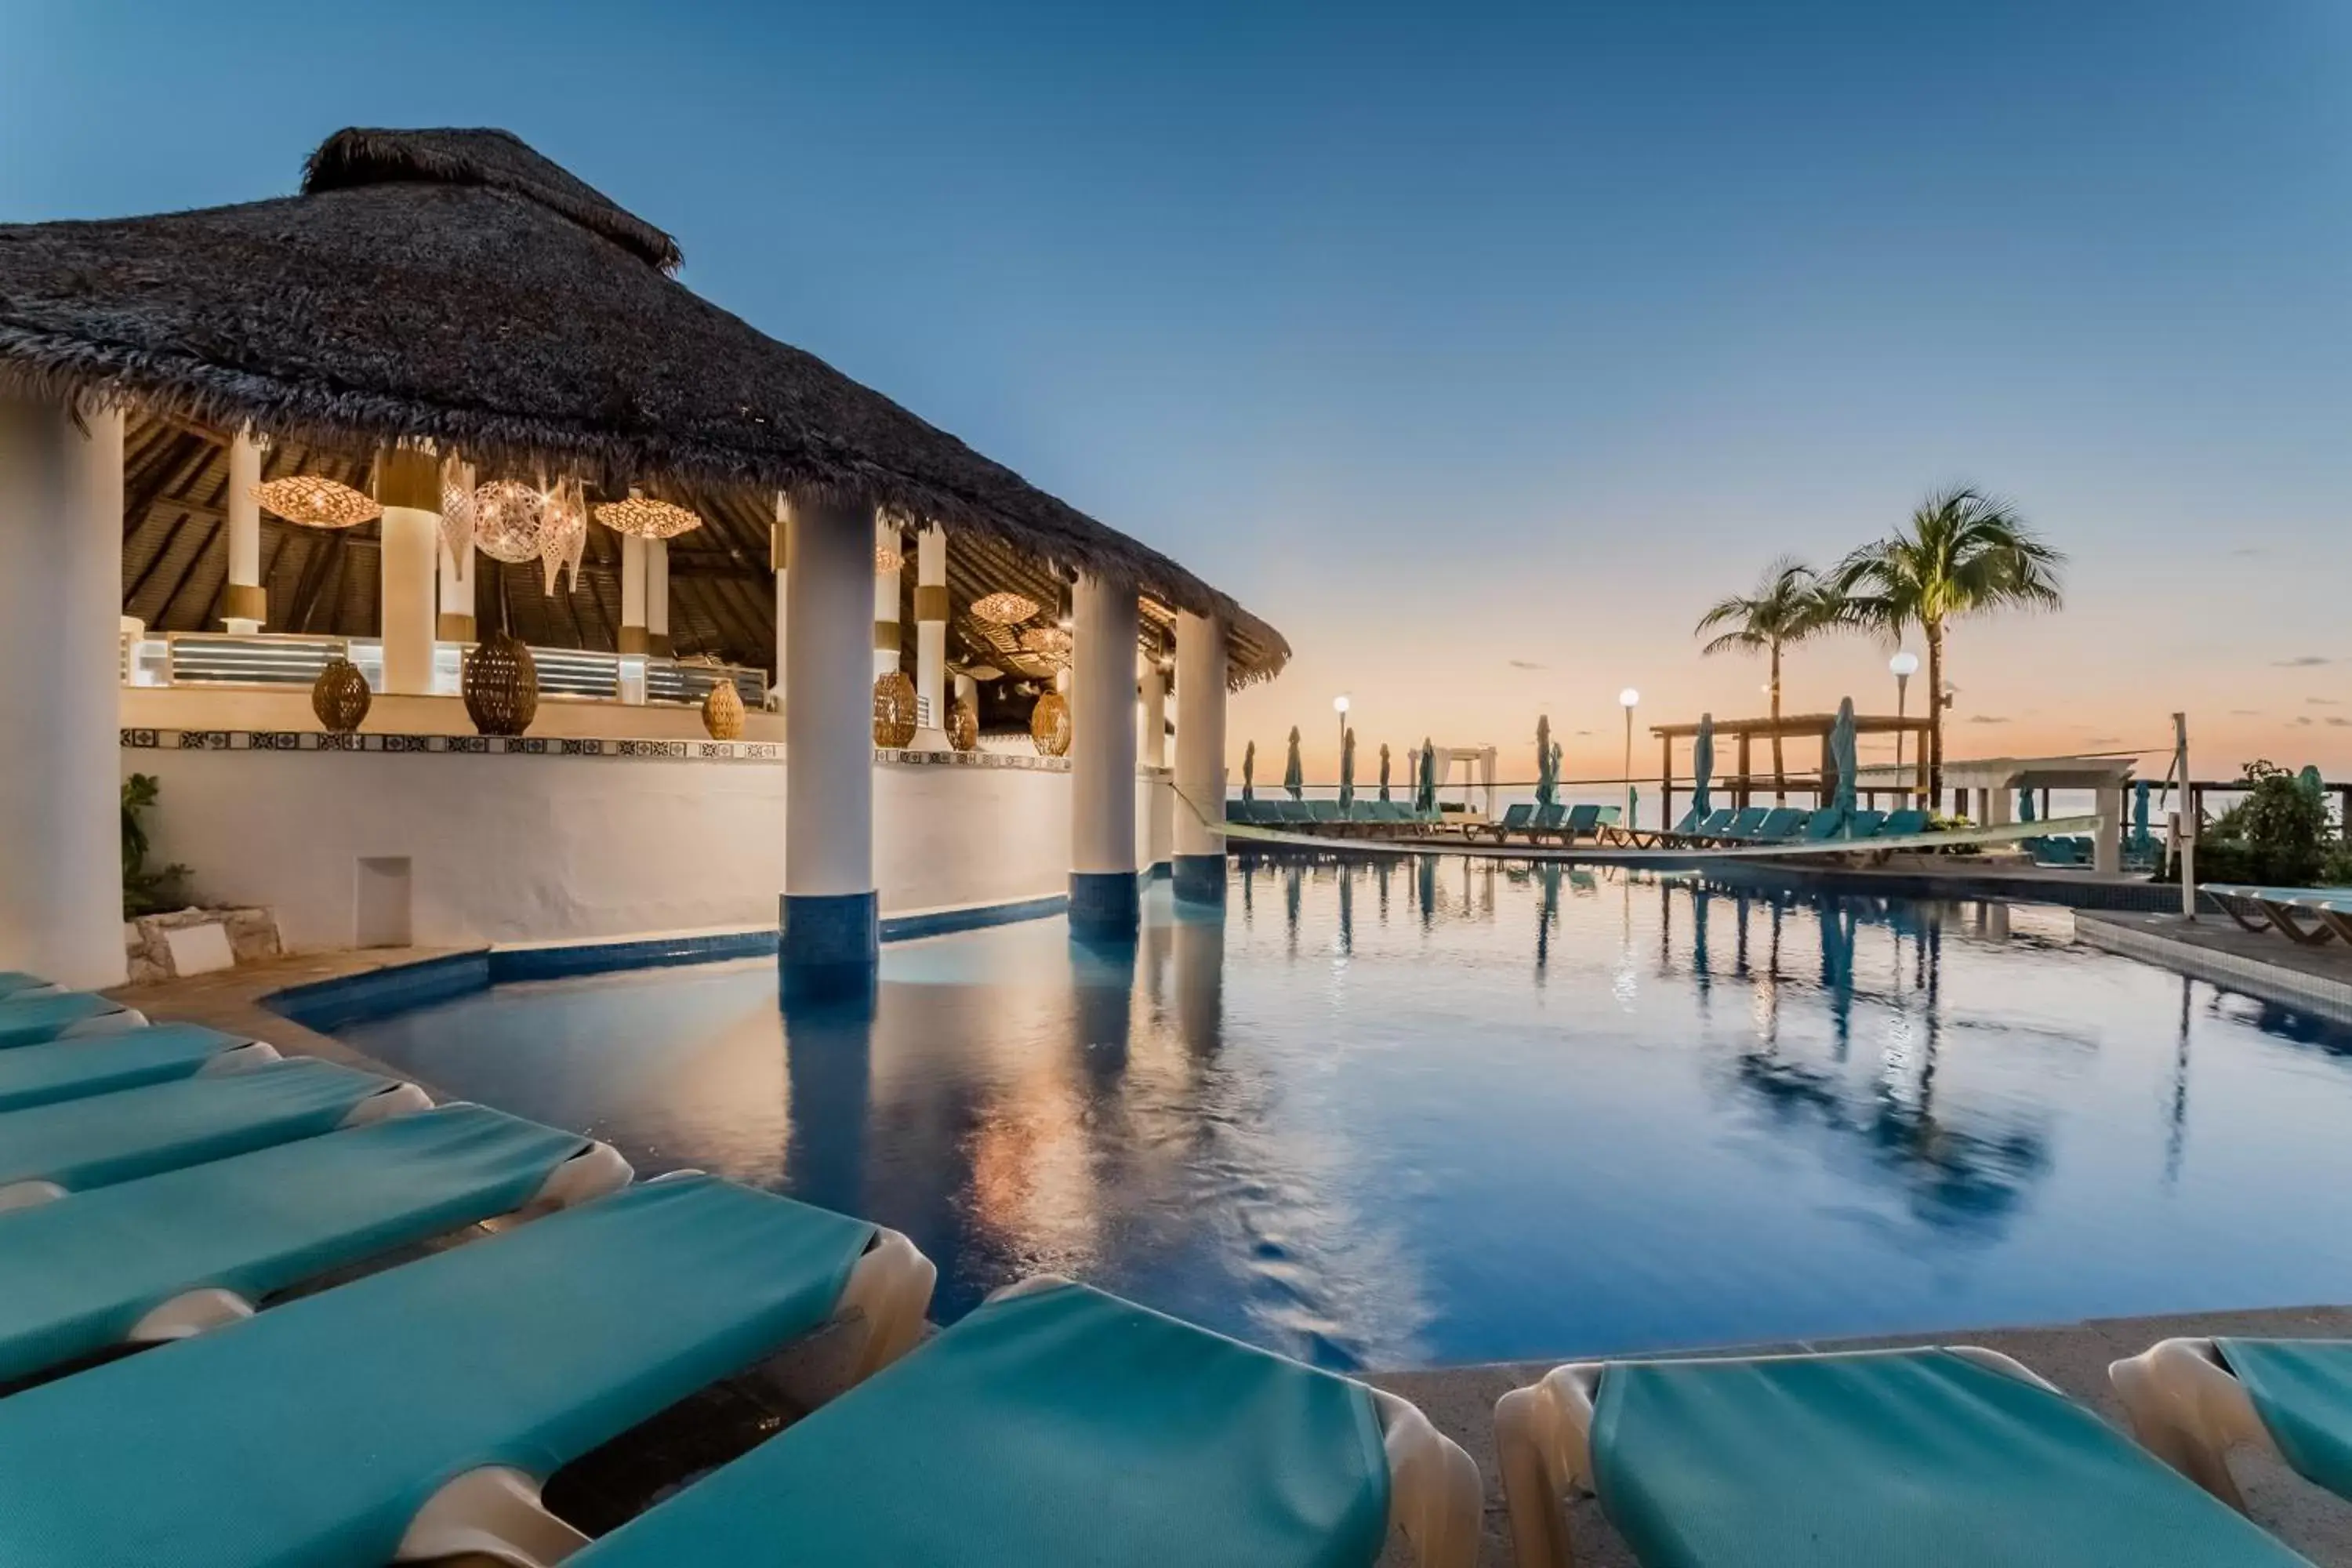 Swimming Pool in Royal Solaris Cancun-All Inclusive